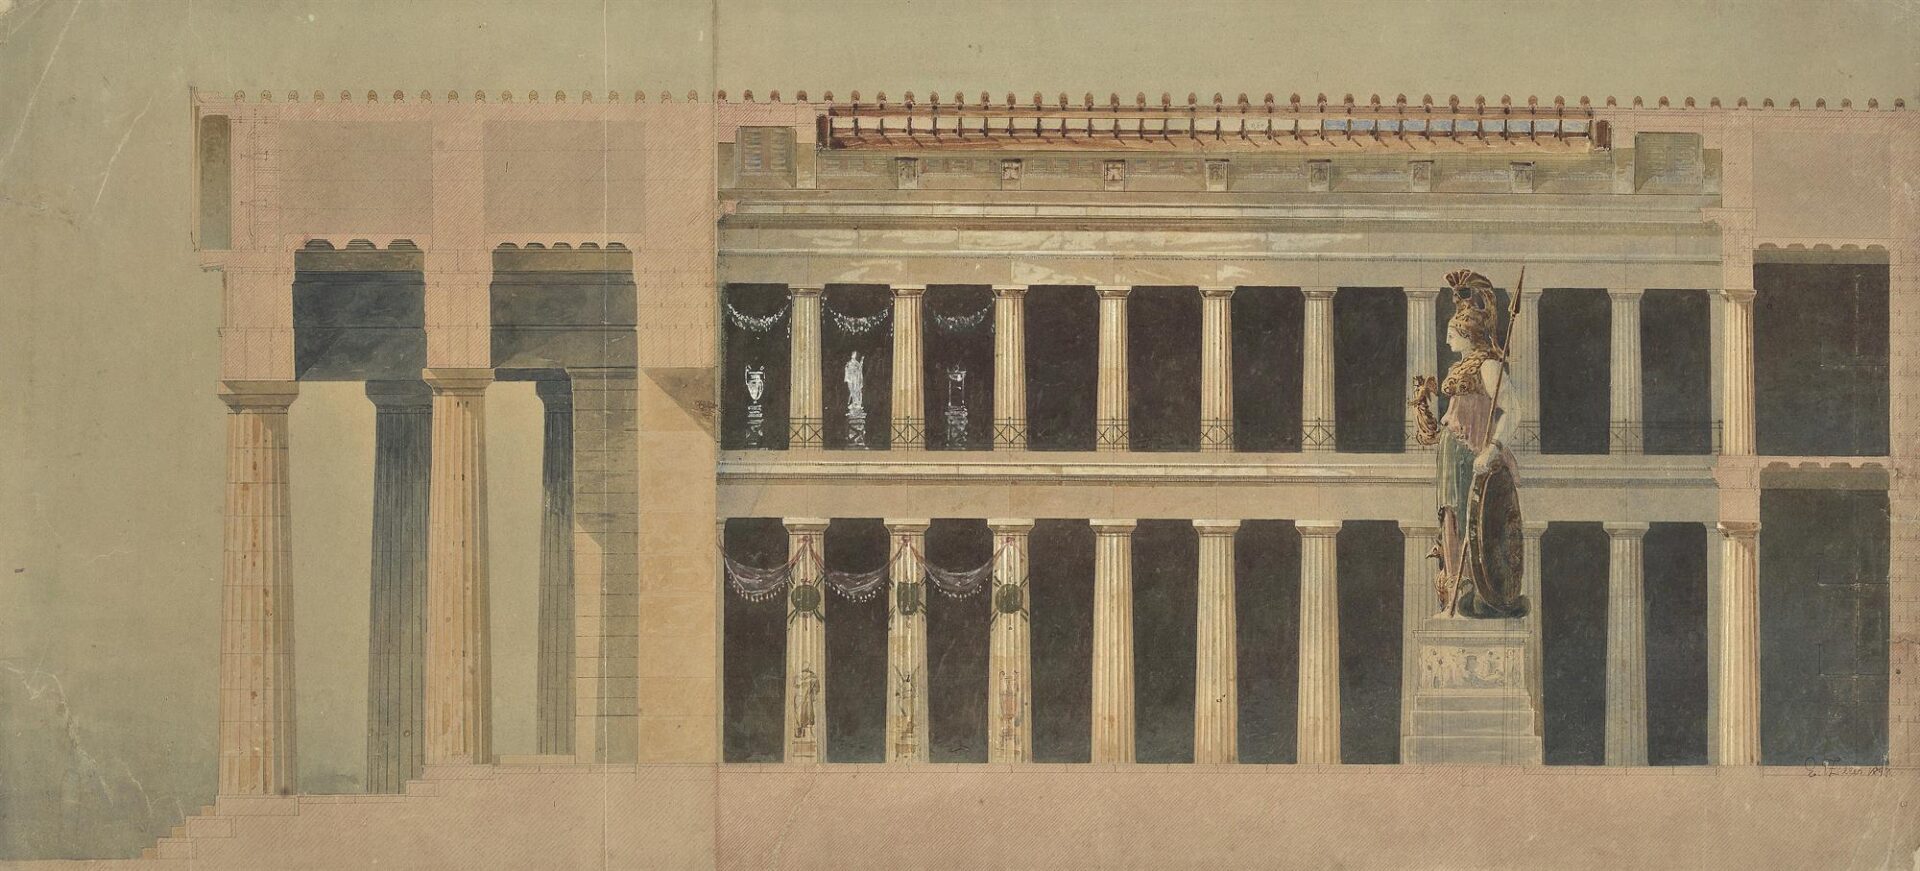 Lighting Study of the Parthenon, Longitudinal Section - Ziller Ernst